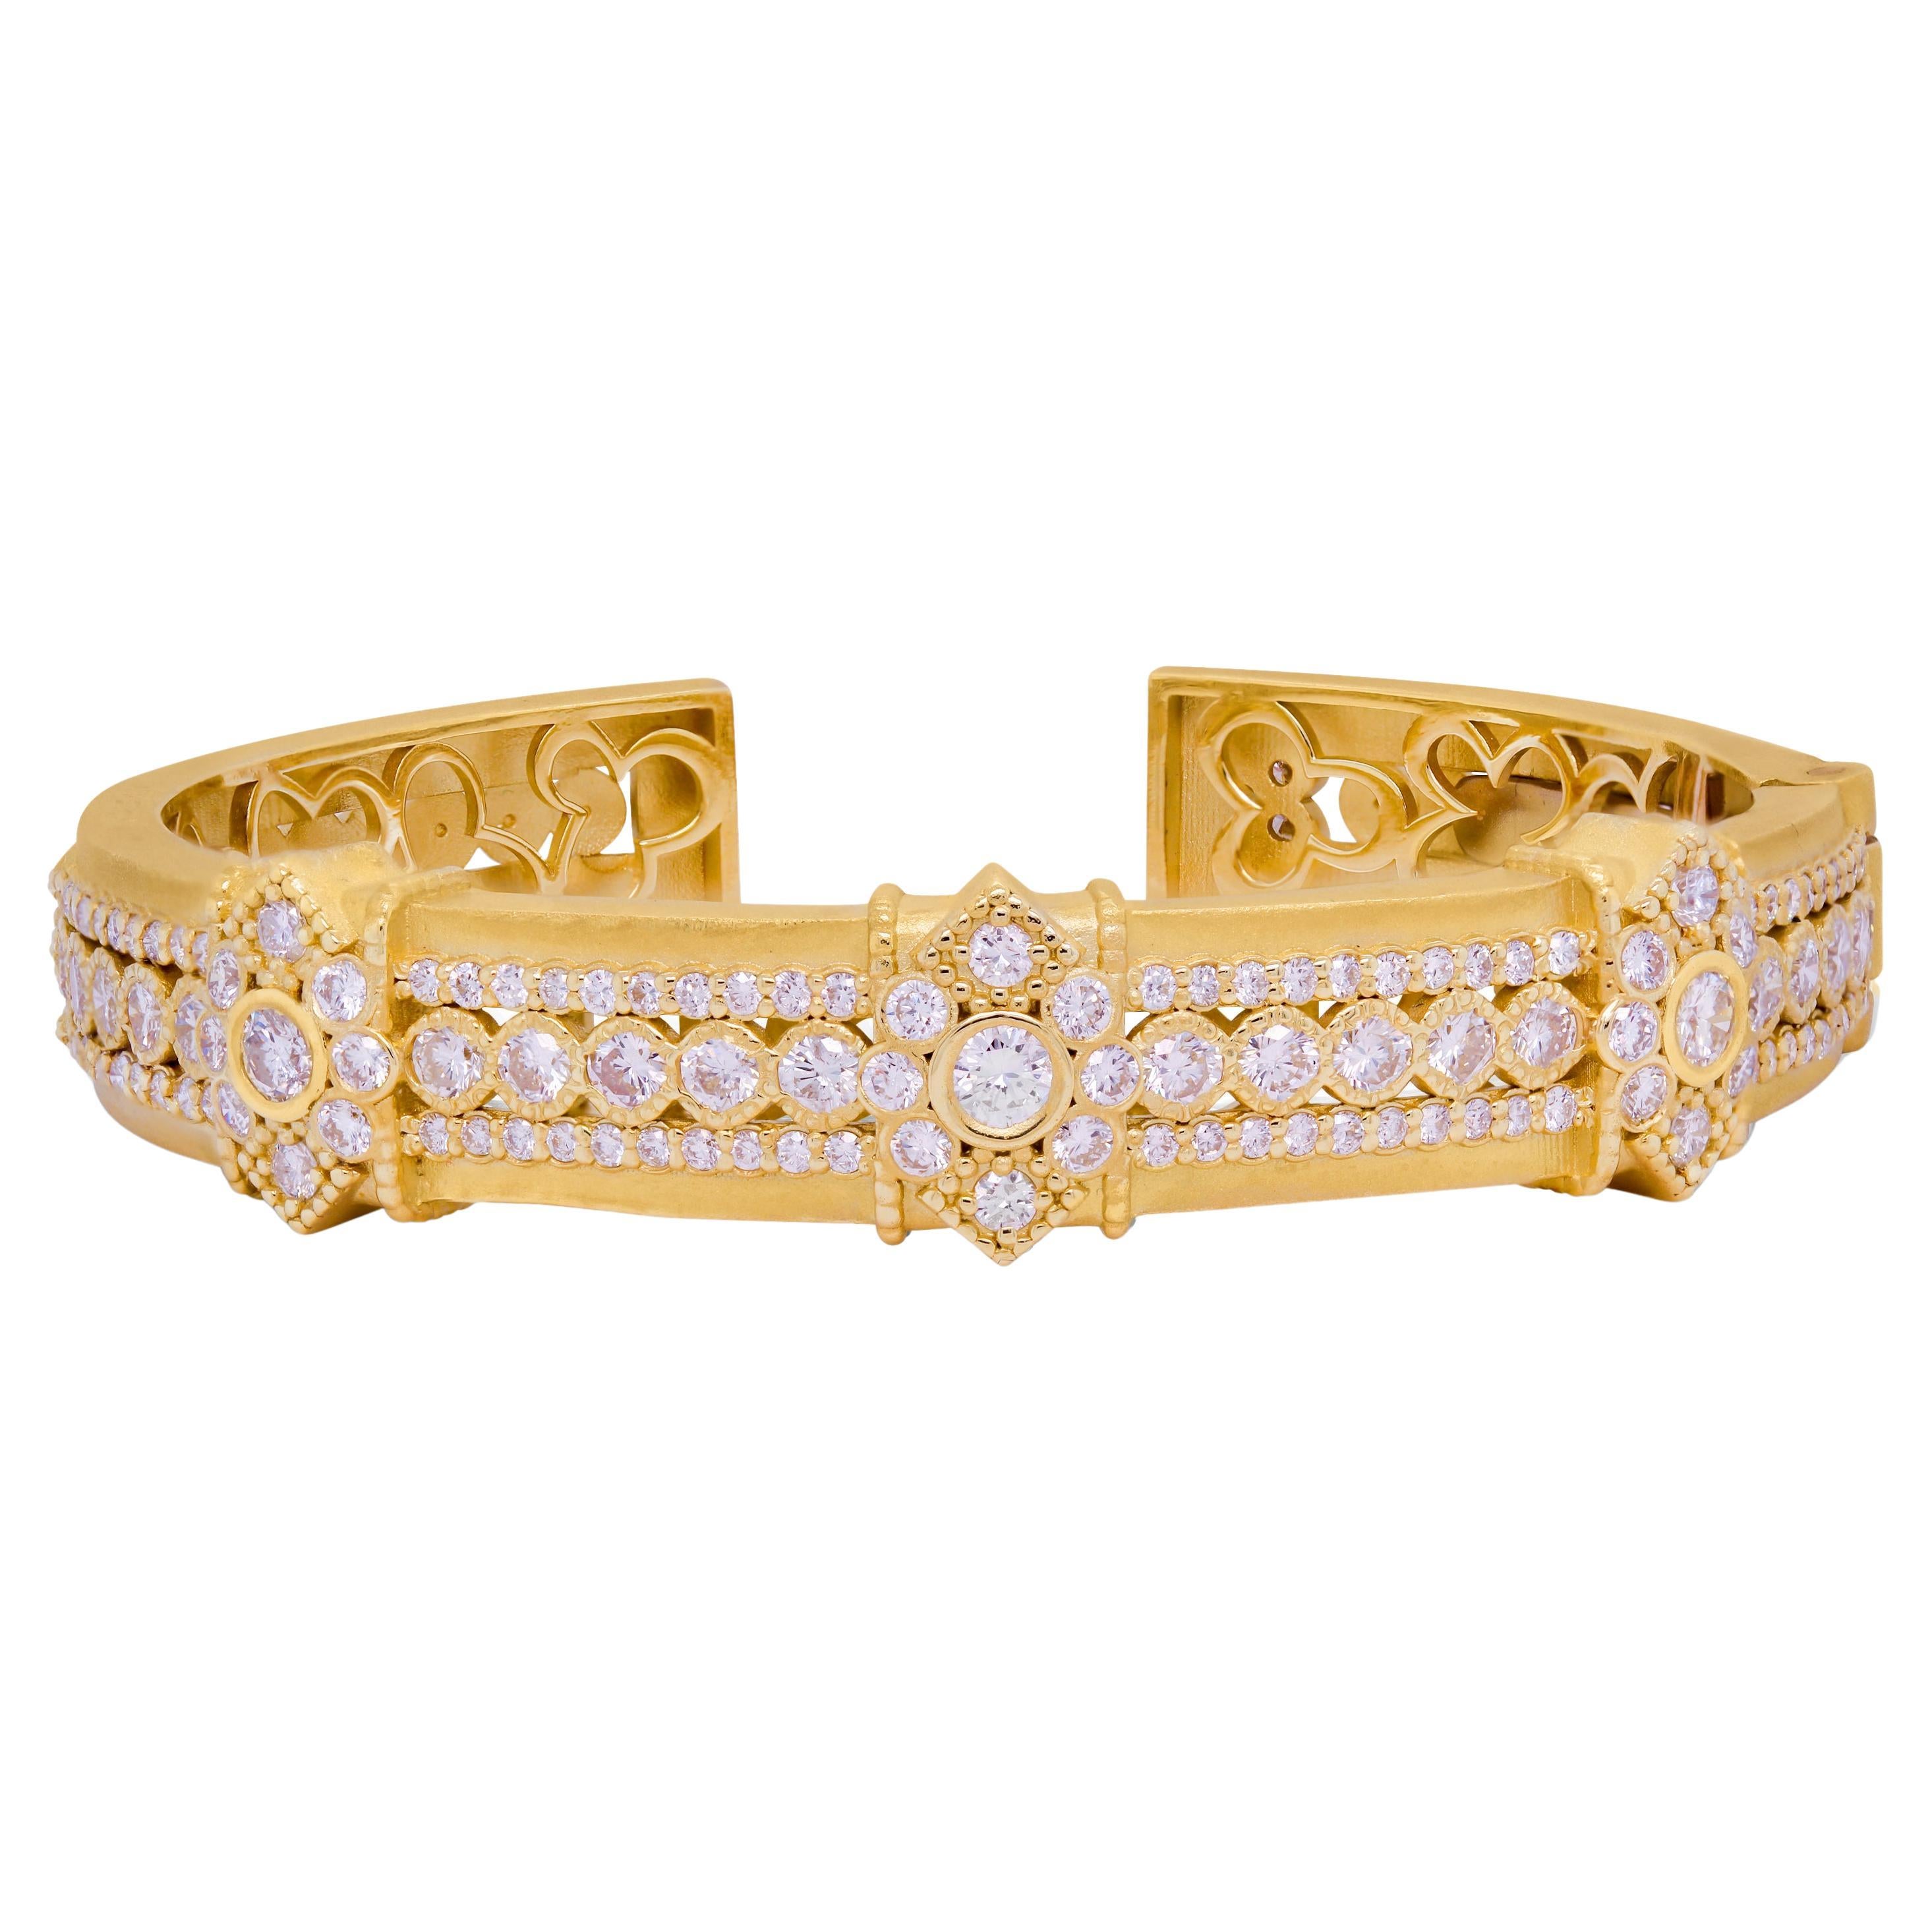 Stambolian 18K Yellow Gold and Diamond Bangle Bracelet For Sale